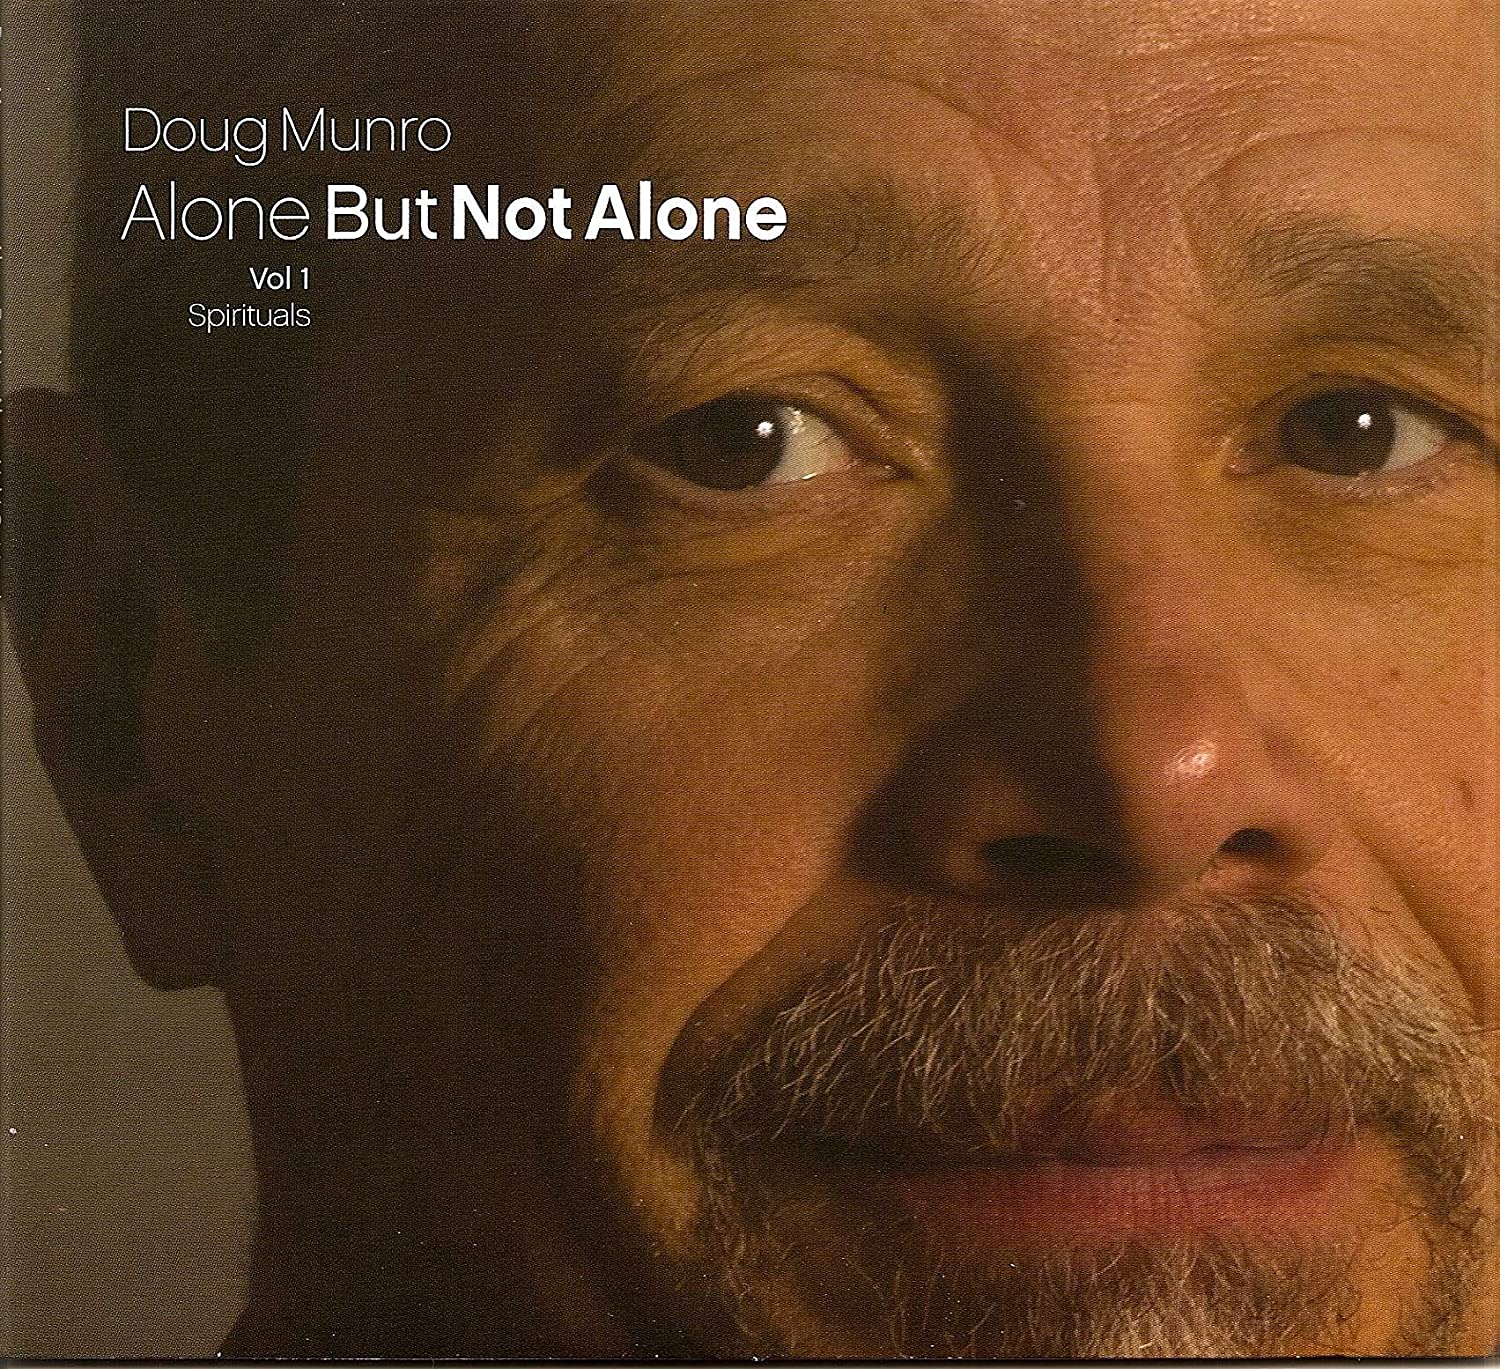 DOUG MUNRO - Alone But Not Alone - Vol 1. Spirituals cover 